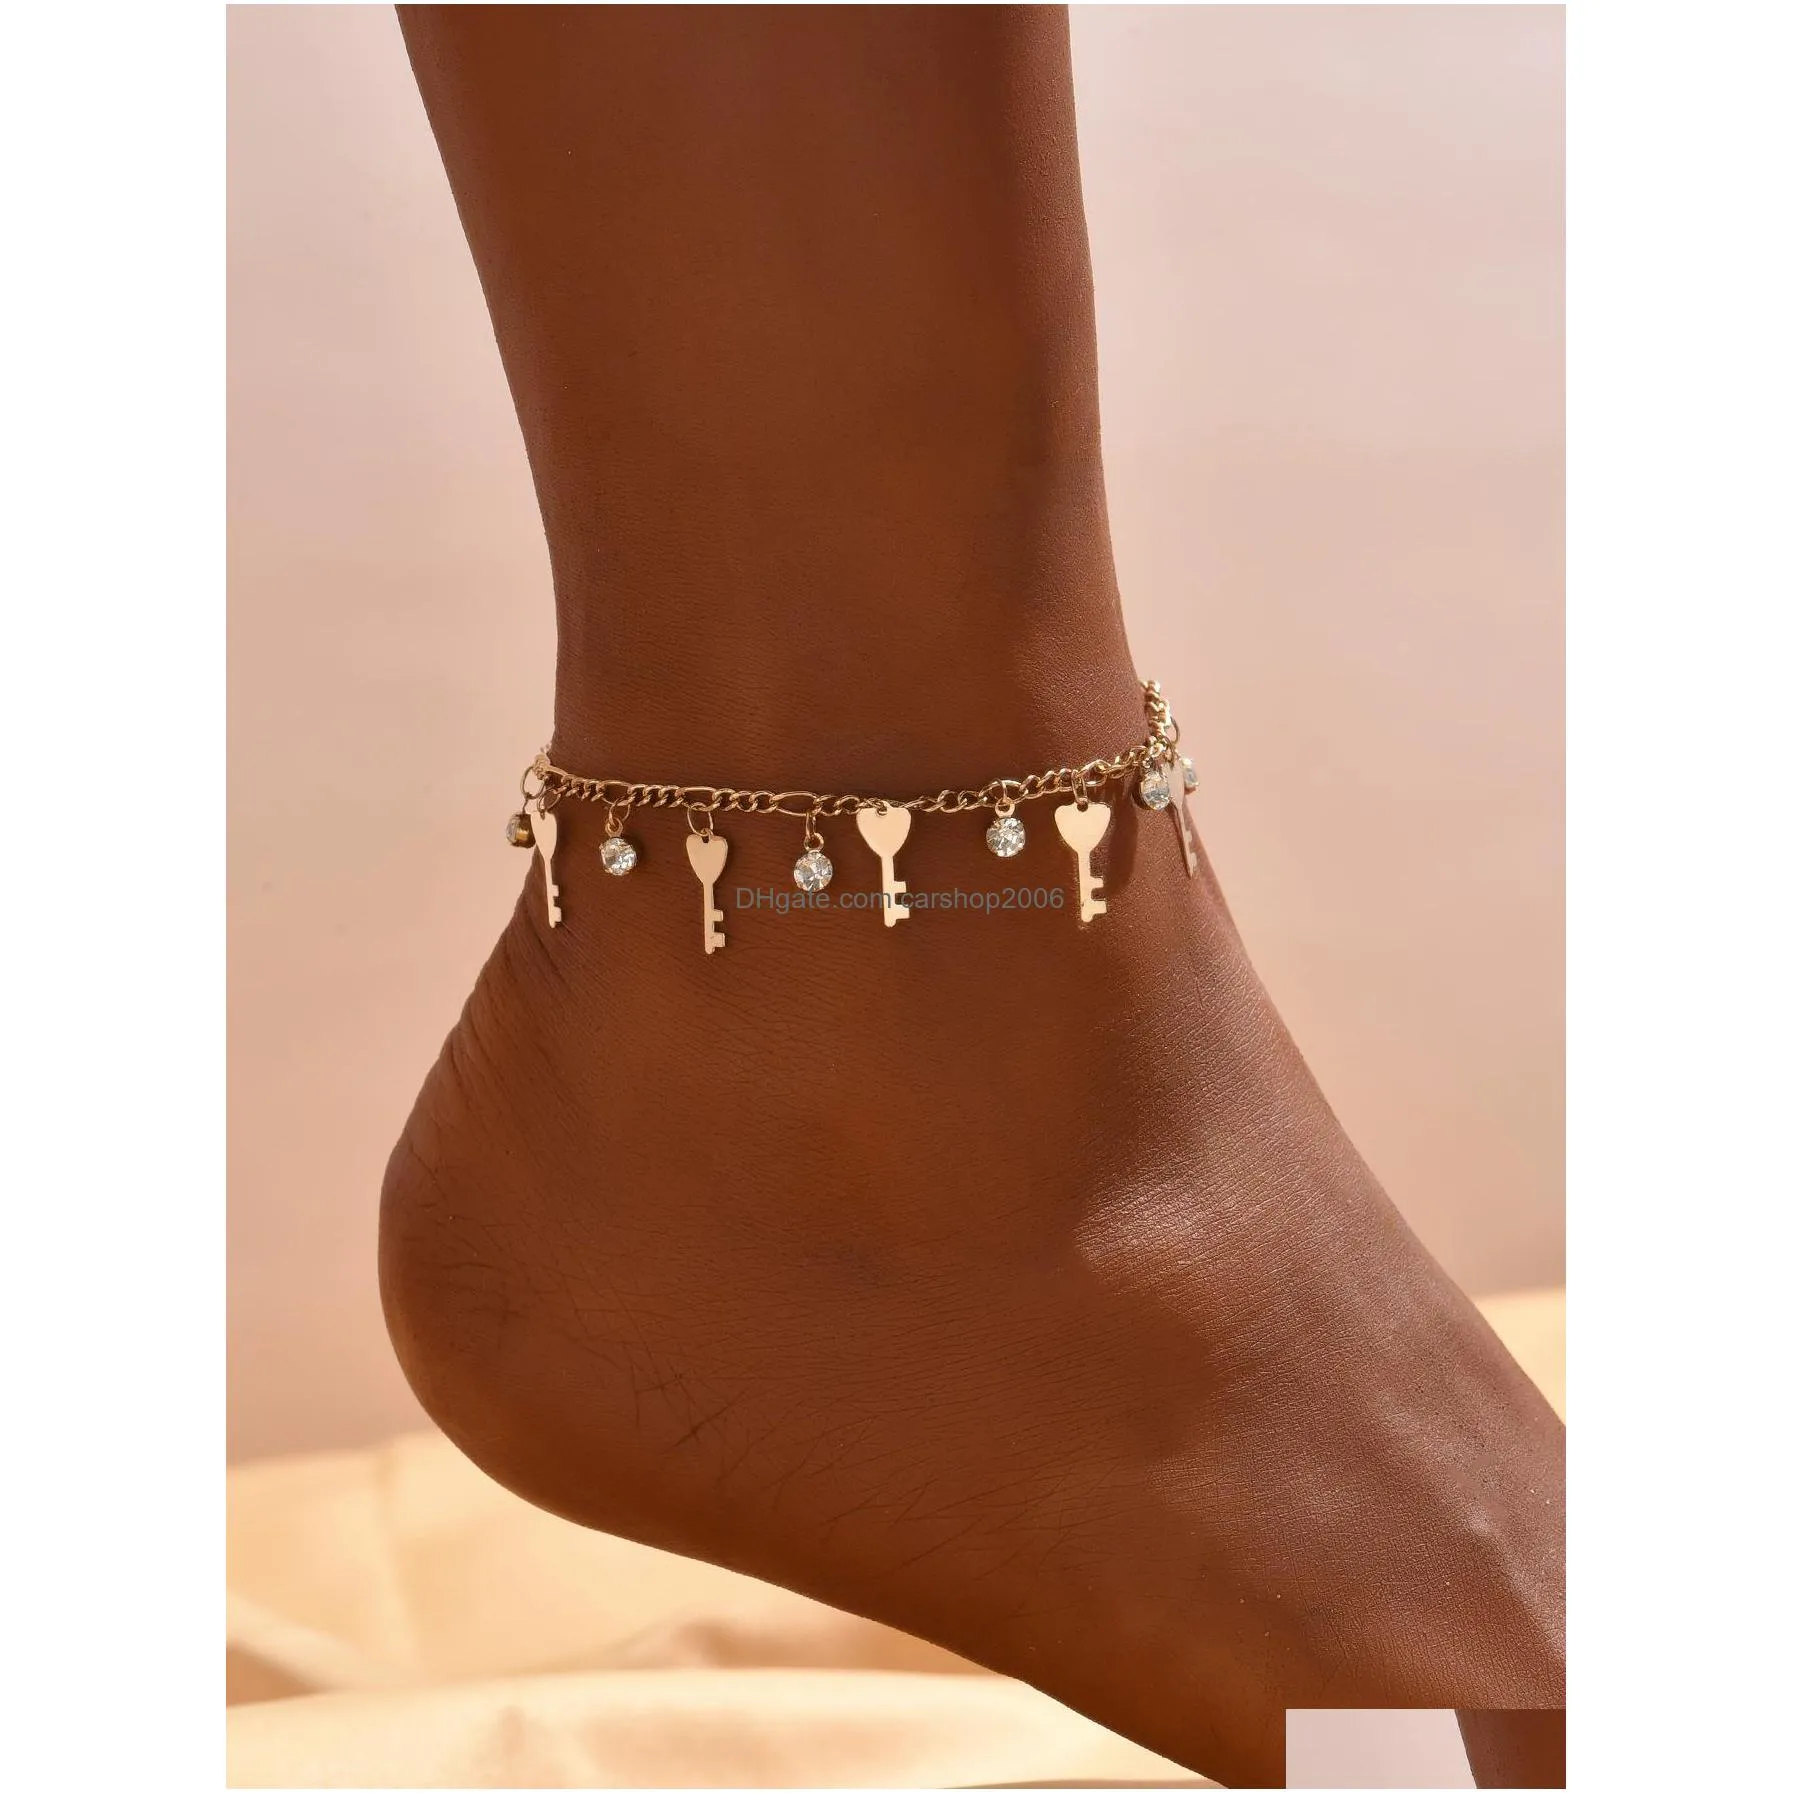 boehmian fashion jewelry key pendant anklet rhinestone dangle beach chain anklets